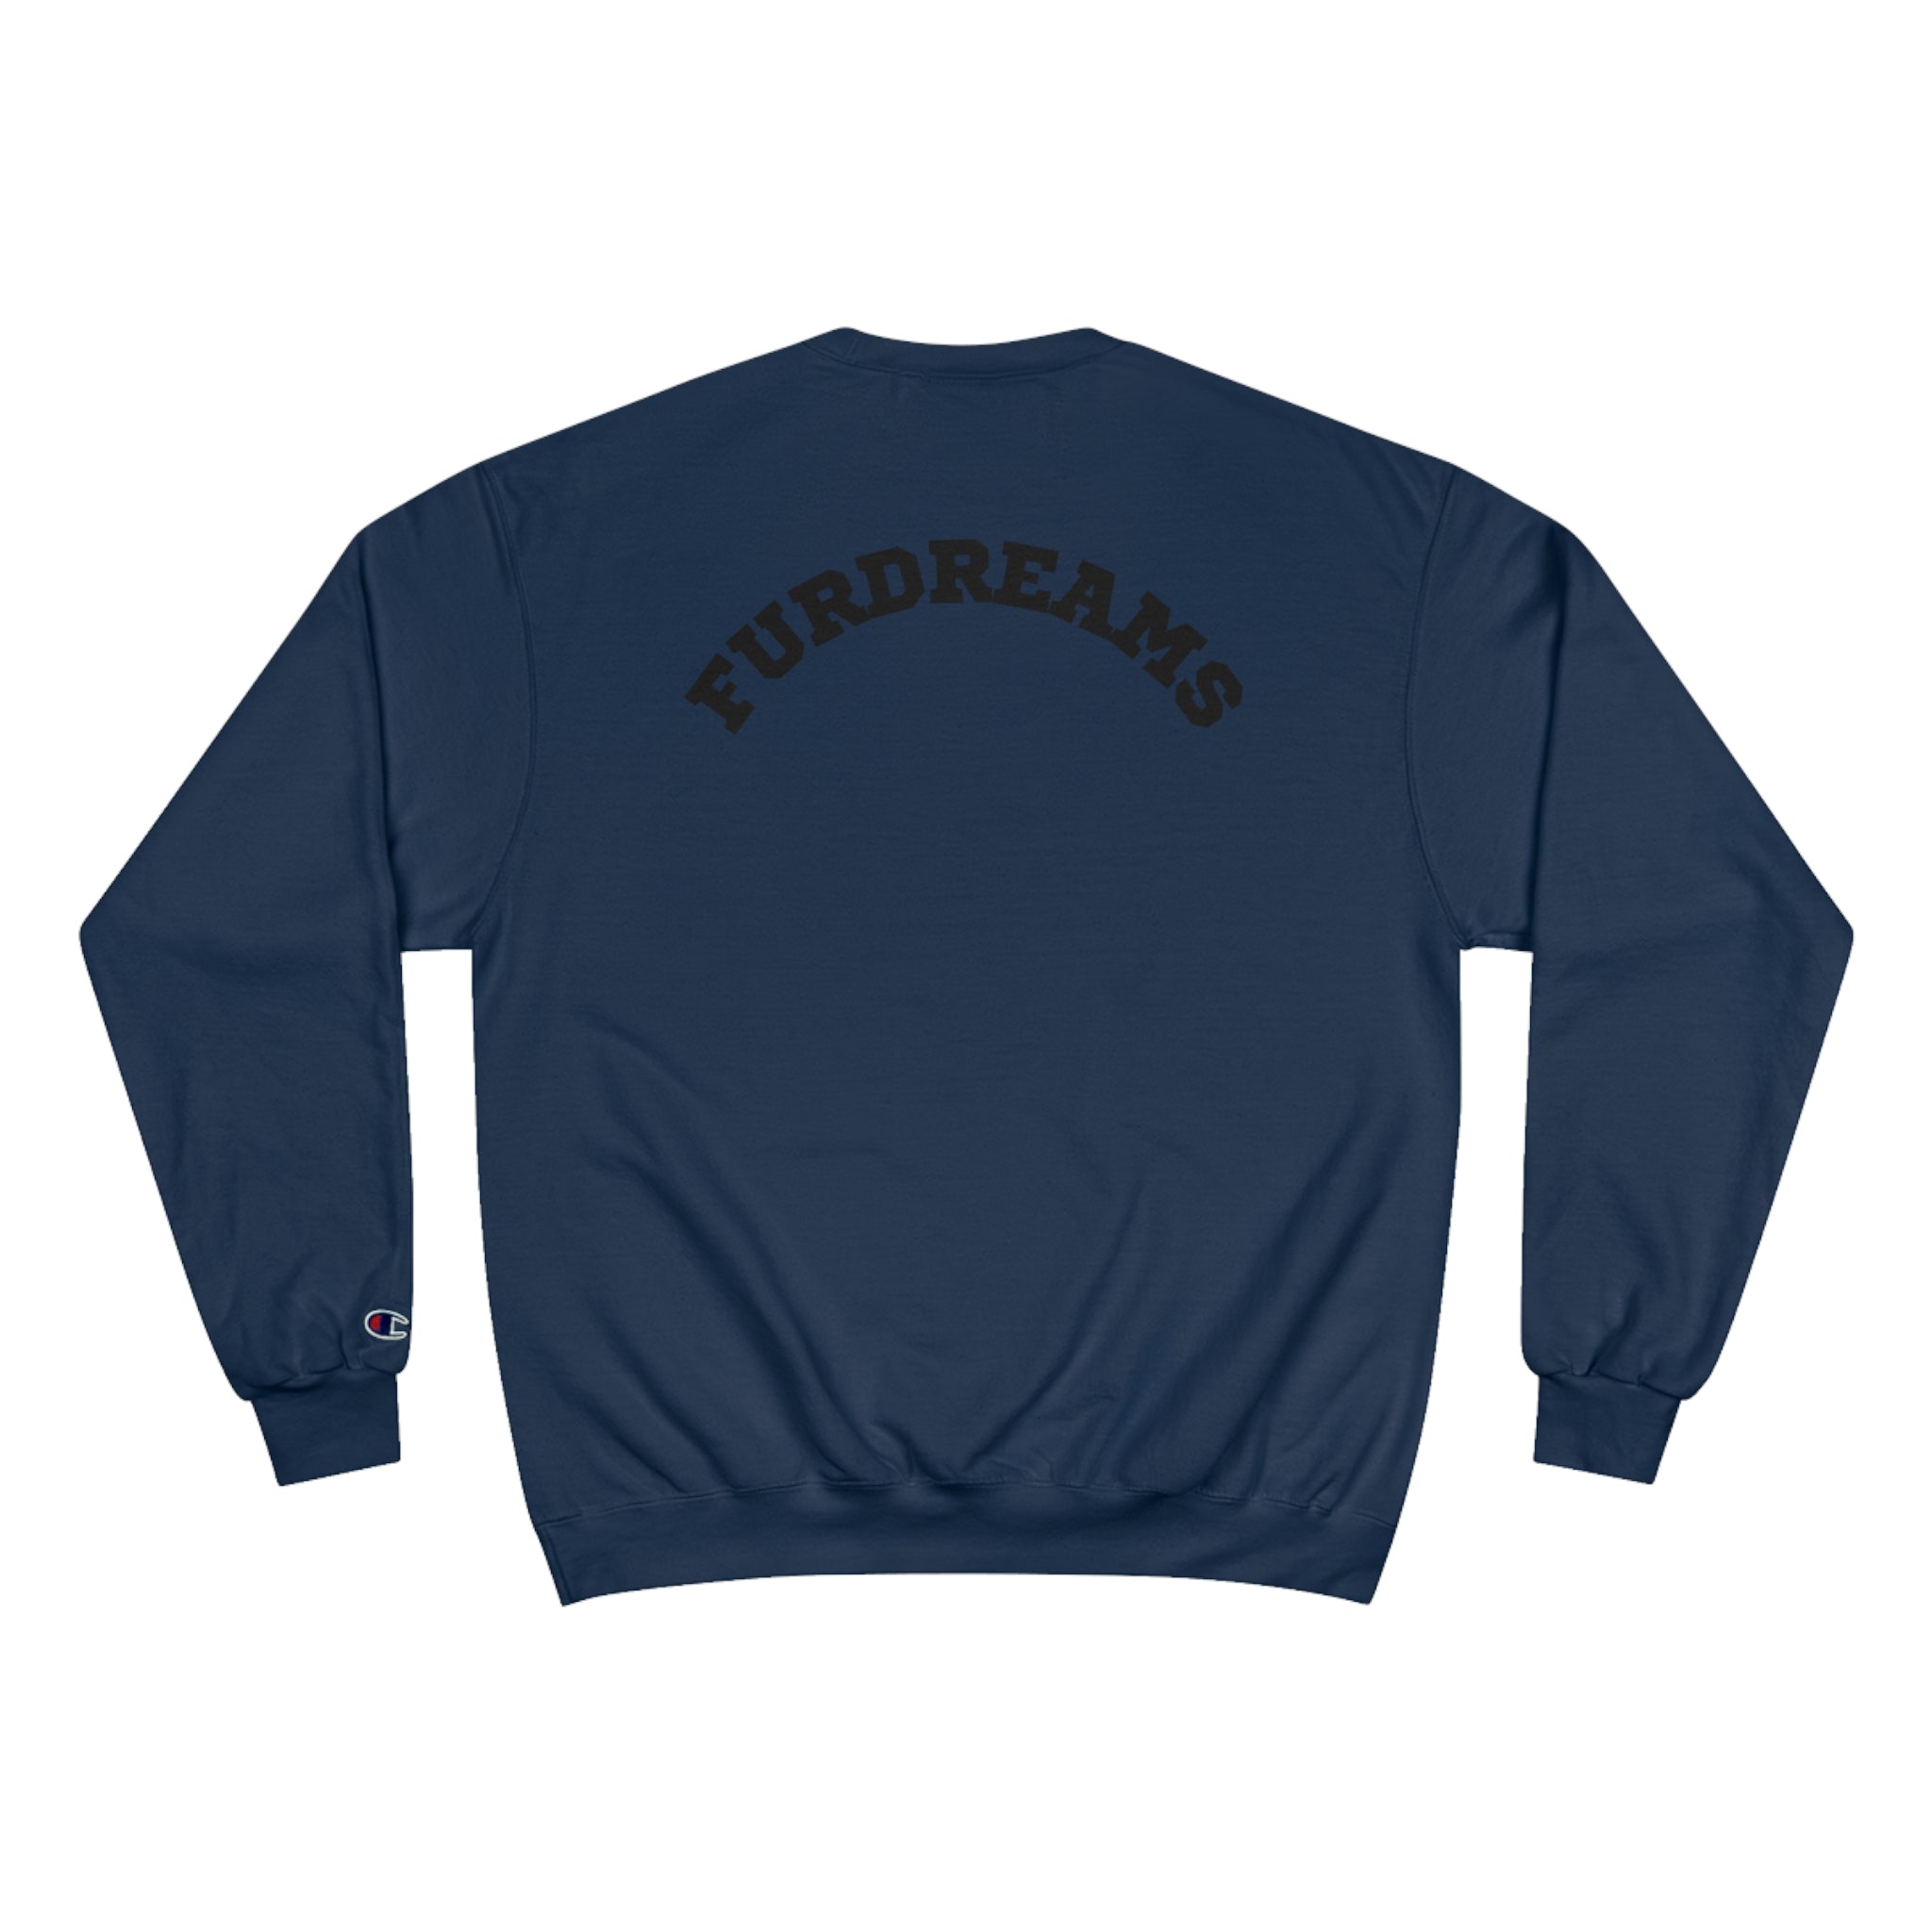 FURDreams ”LVS” VIII Champion Sweatshirt